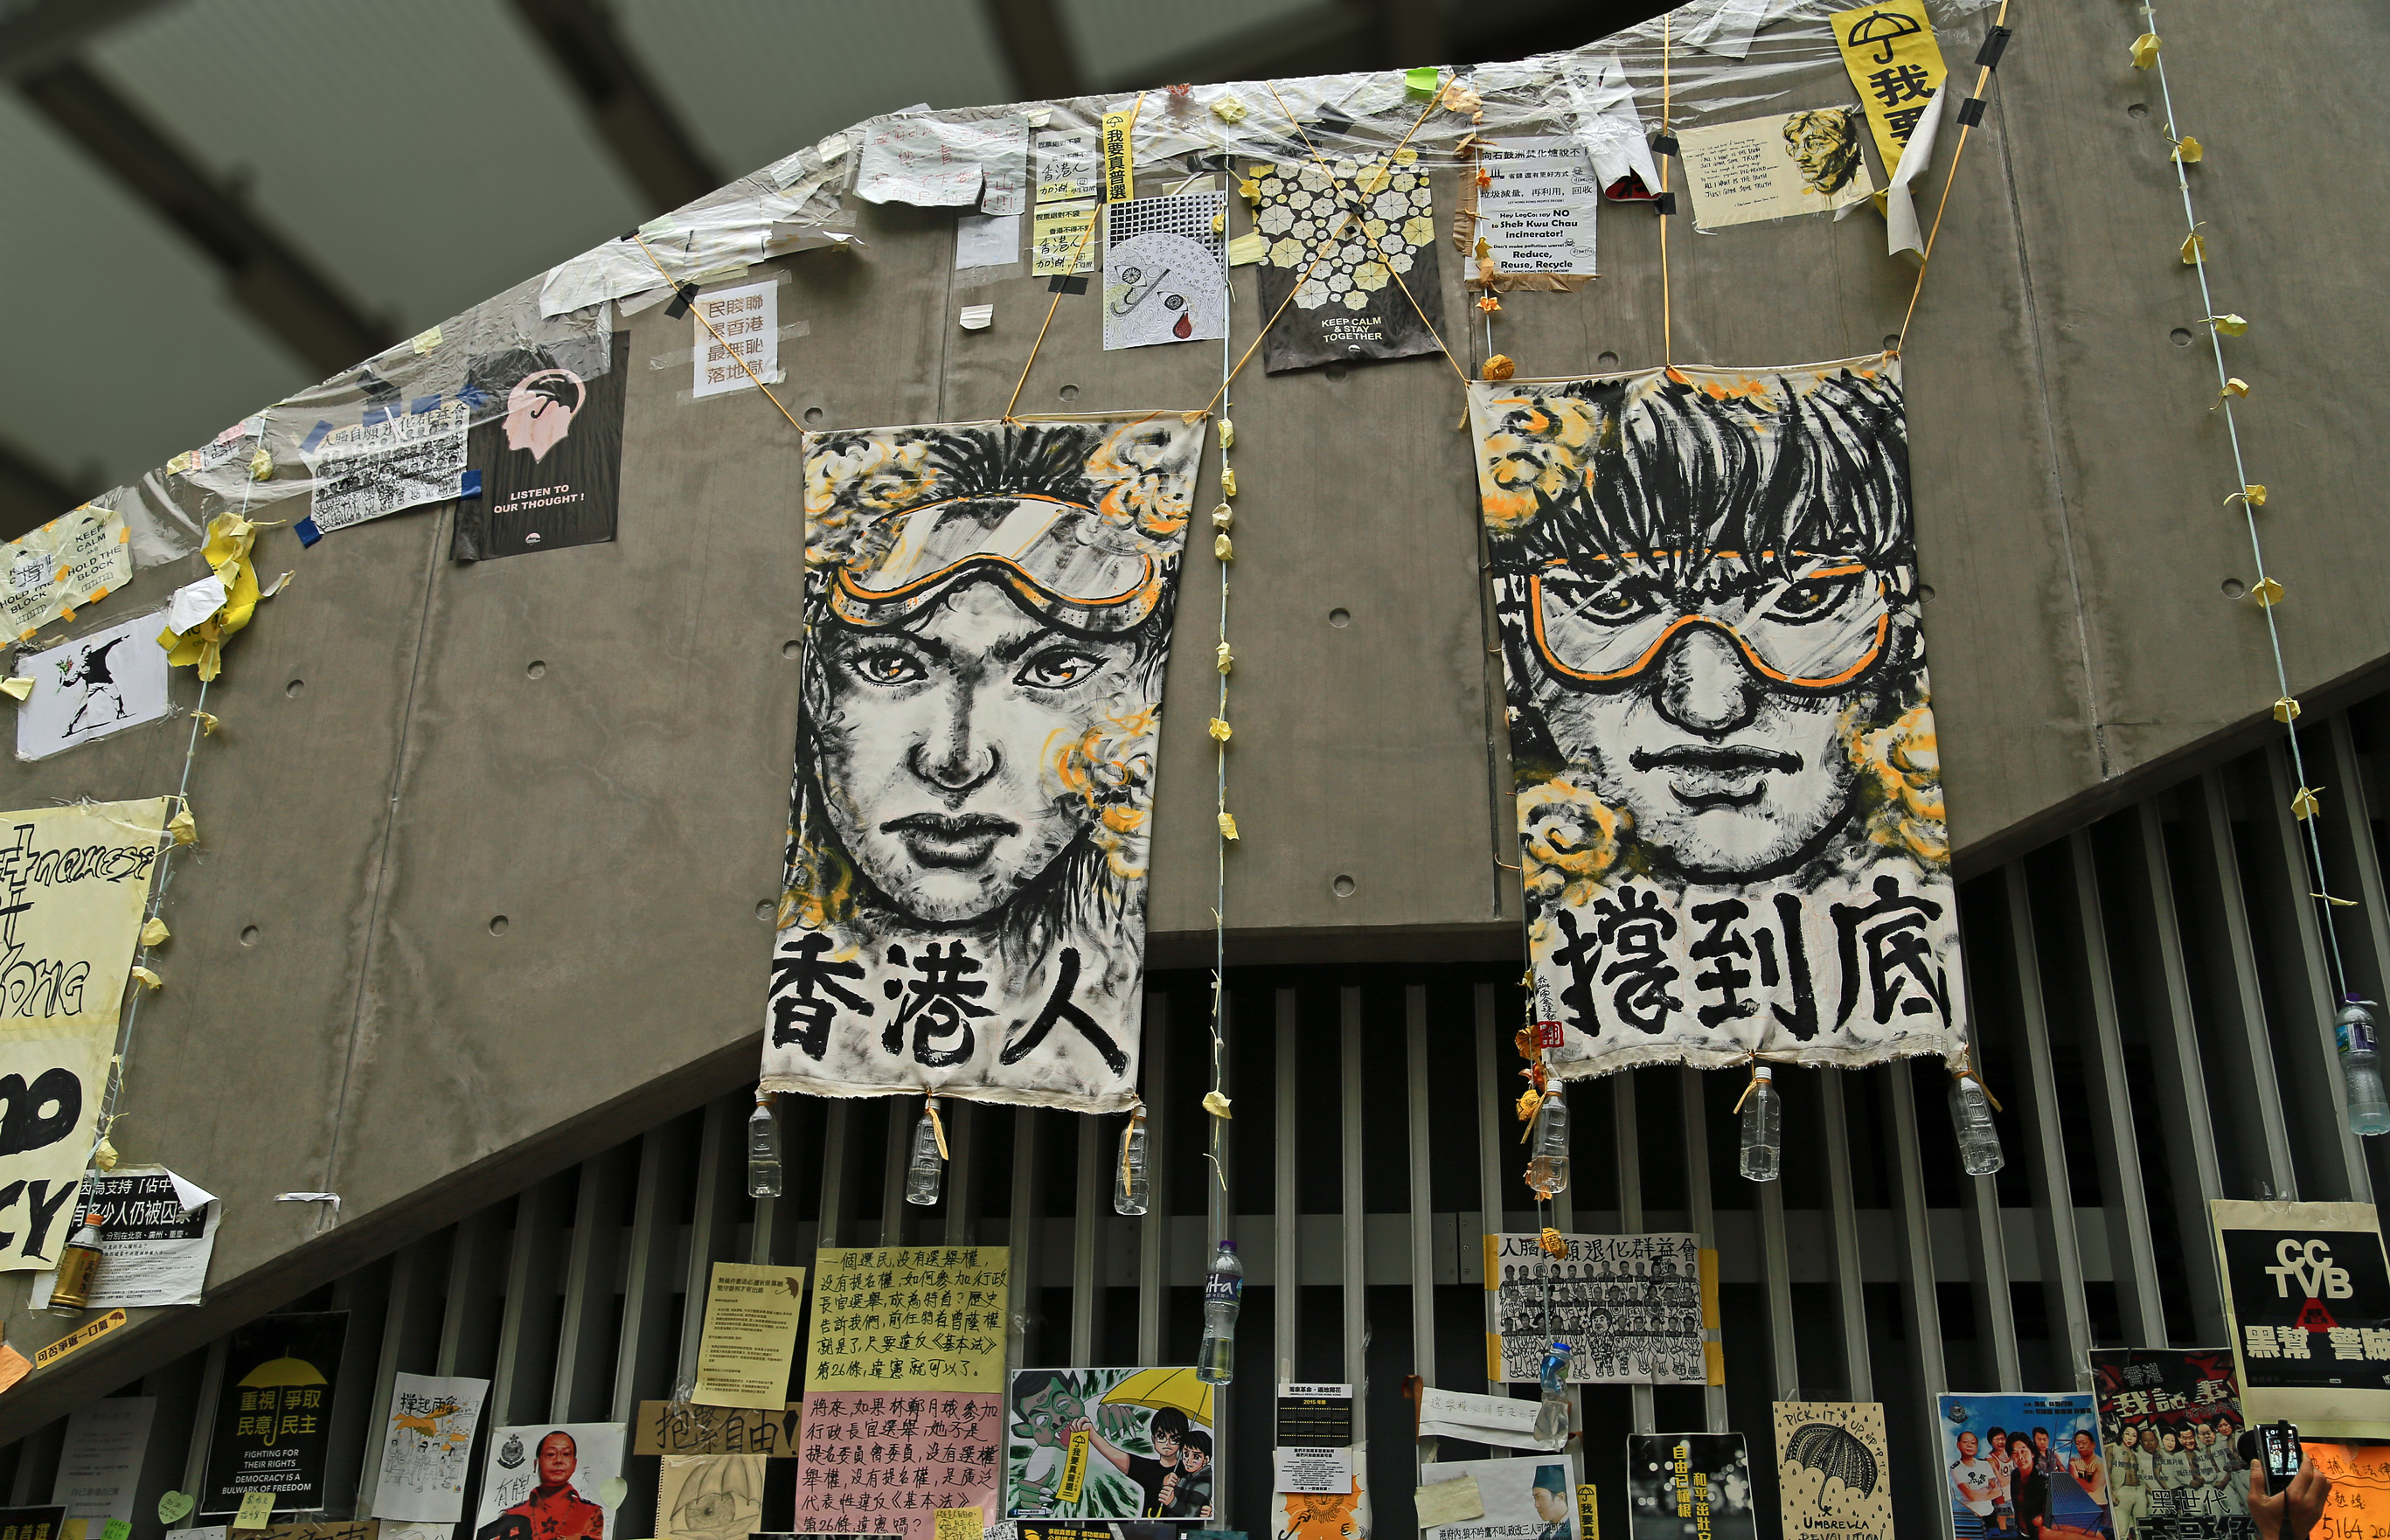 China - Hong Kong - Admiralty - Umbrella Revolution - Hong Kong People Fight to the End